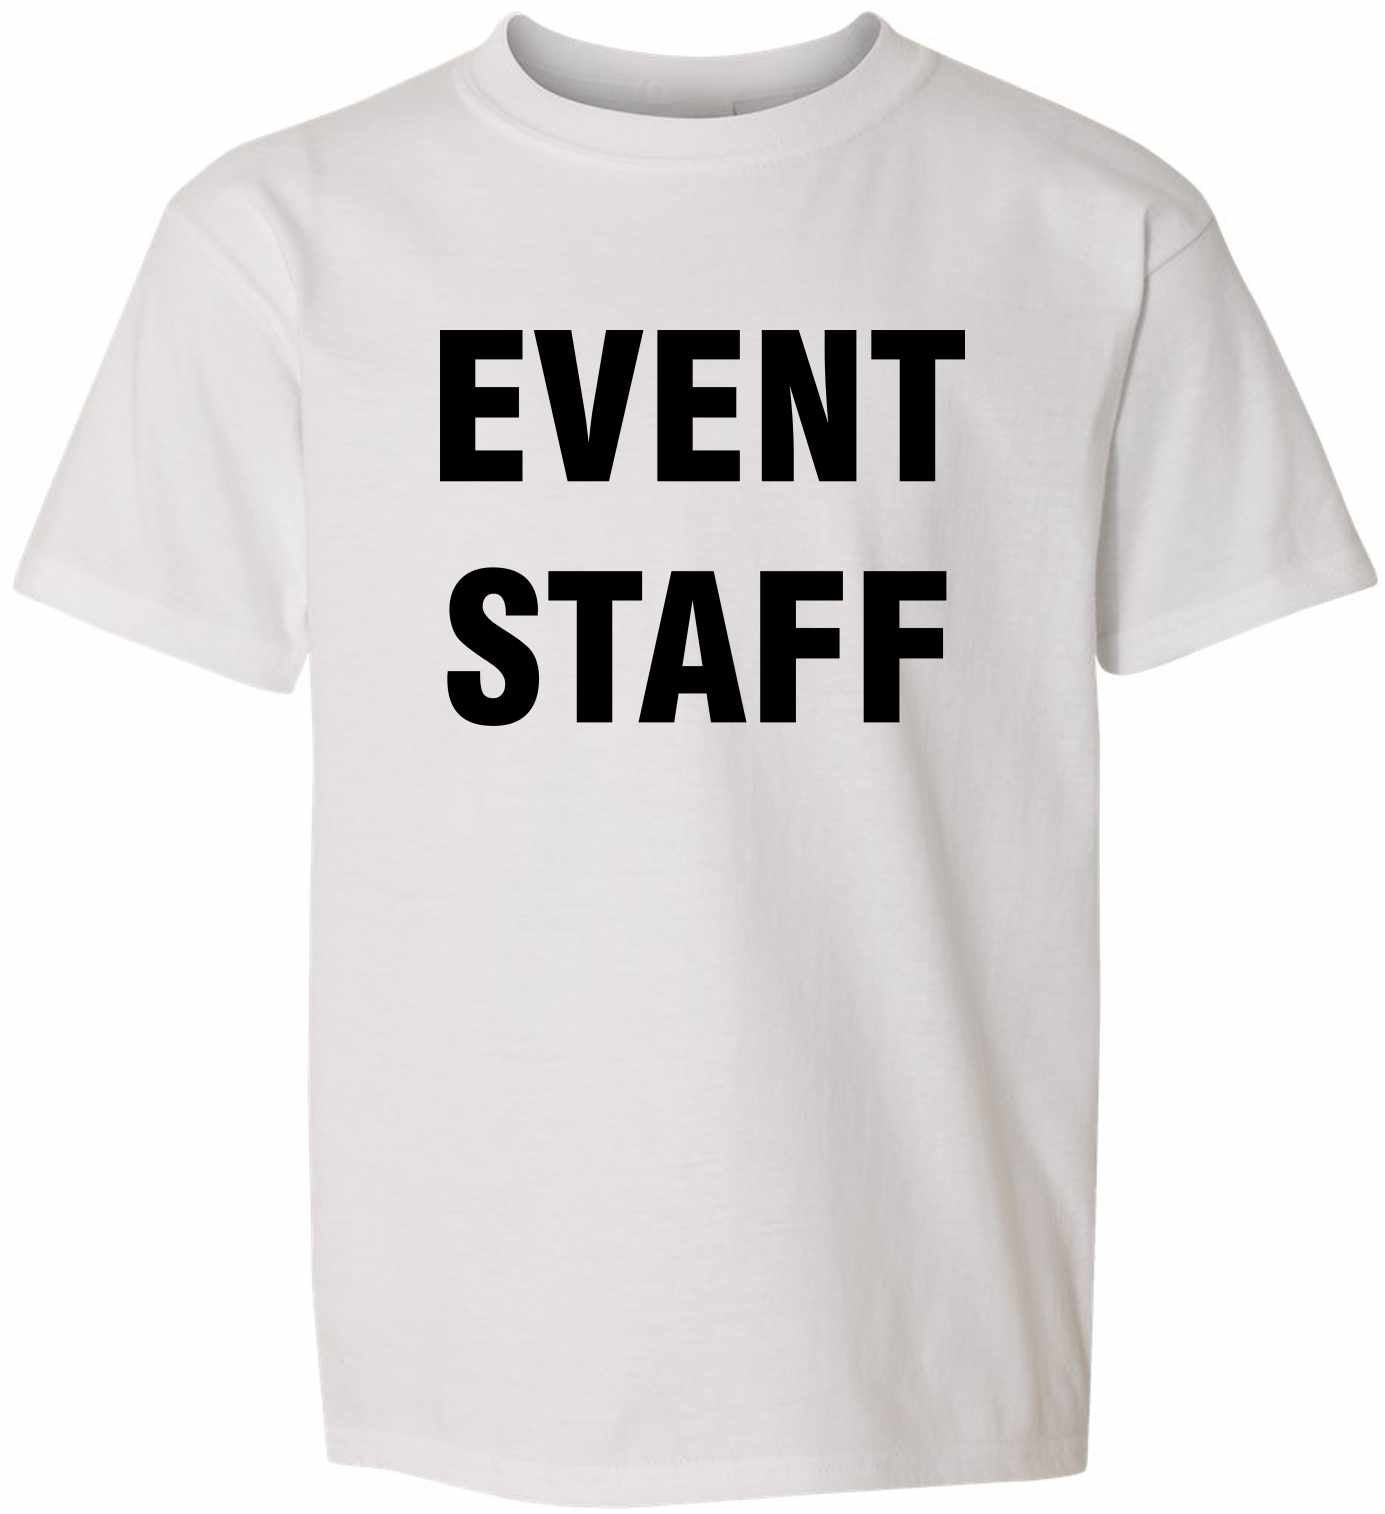 EVENT STAFF on Kids T-Shirt (#399-201)